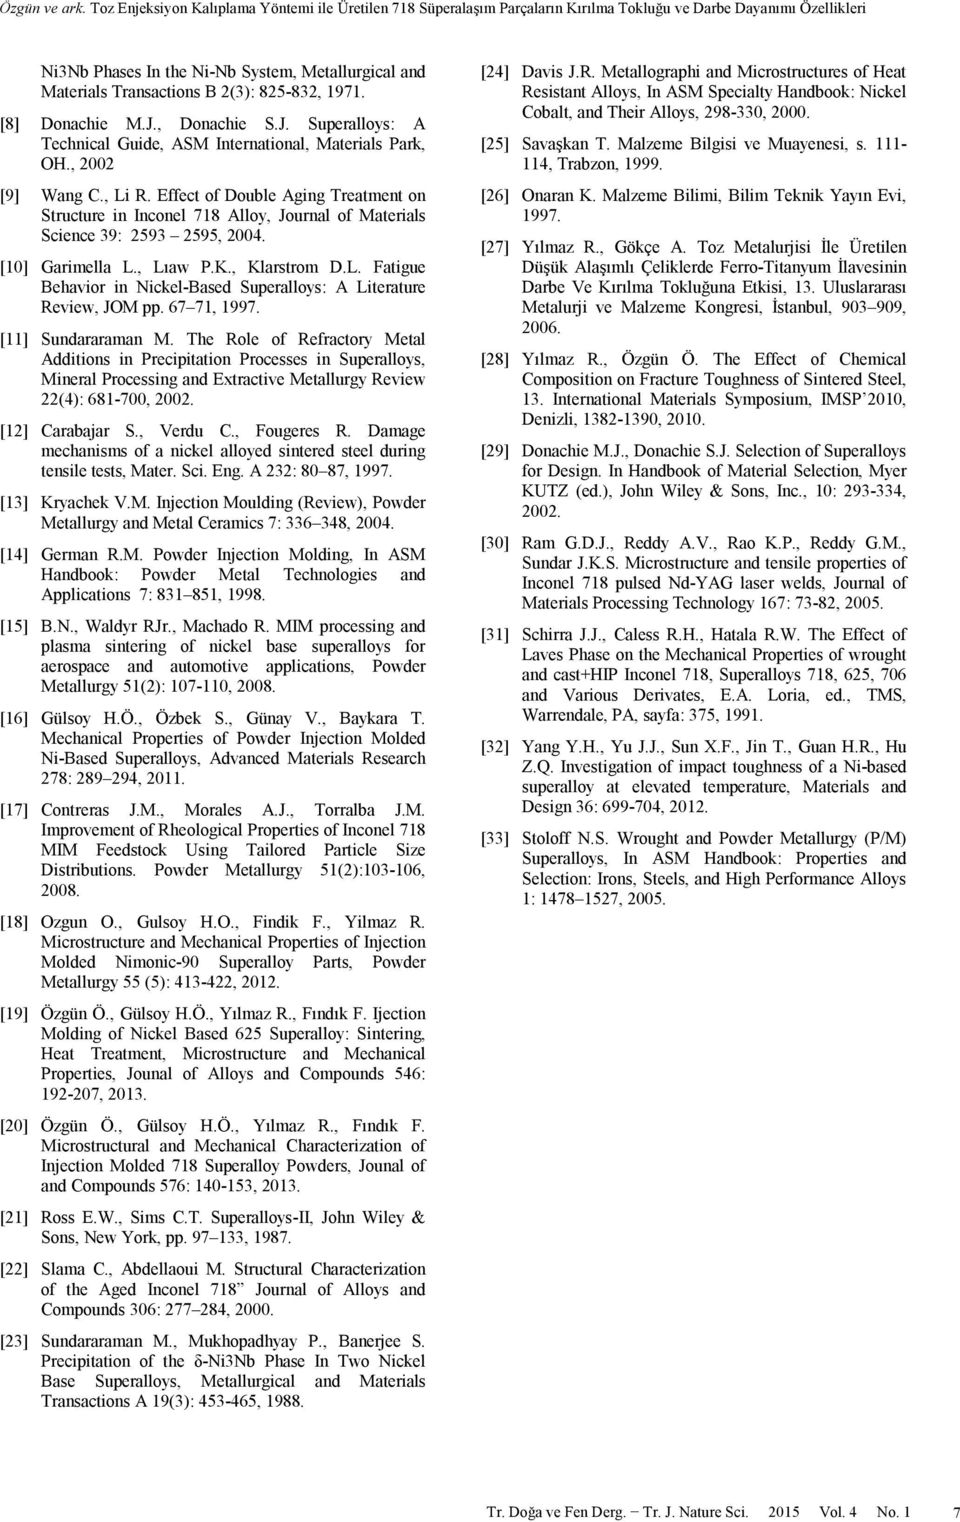 2(3): 825-832, 1971. [8] Donachie M.J., Donachie S.J. Superalloys: A Technical Guide, ASM International, Materials Park, OH., 2002 [9] Wang C., Li R.